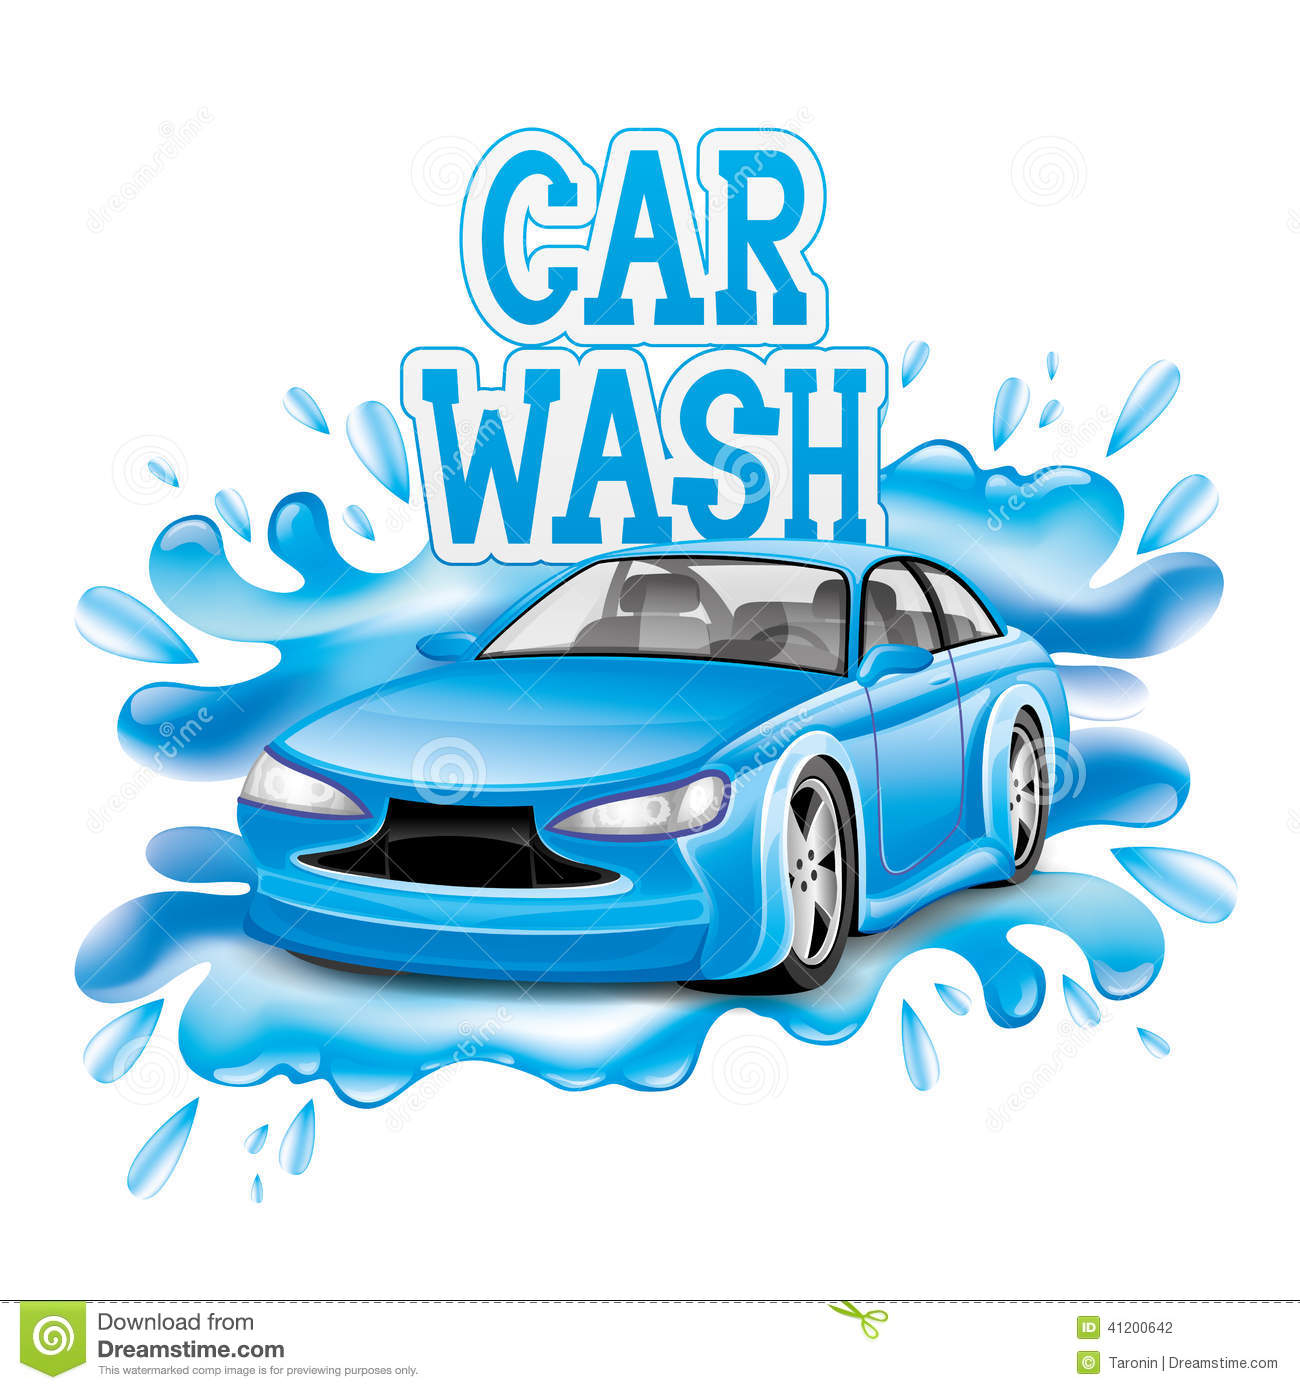 free vector car wash clipart - photo #2